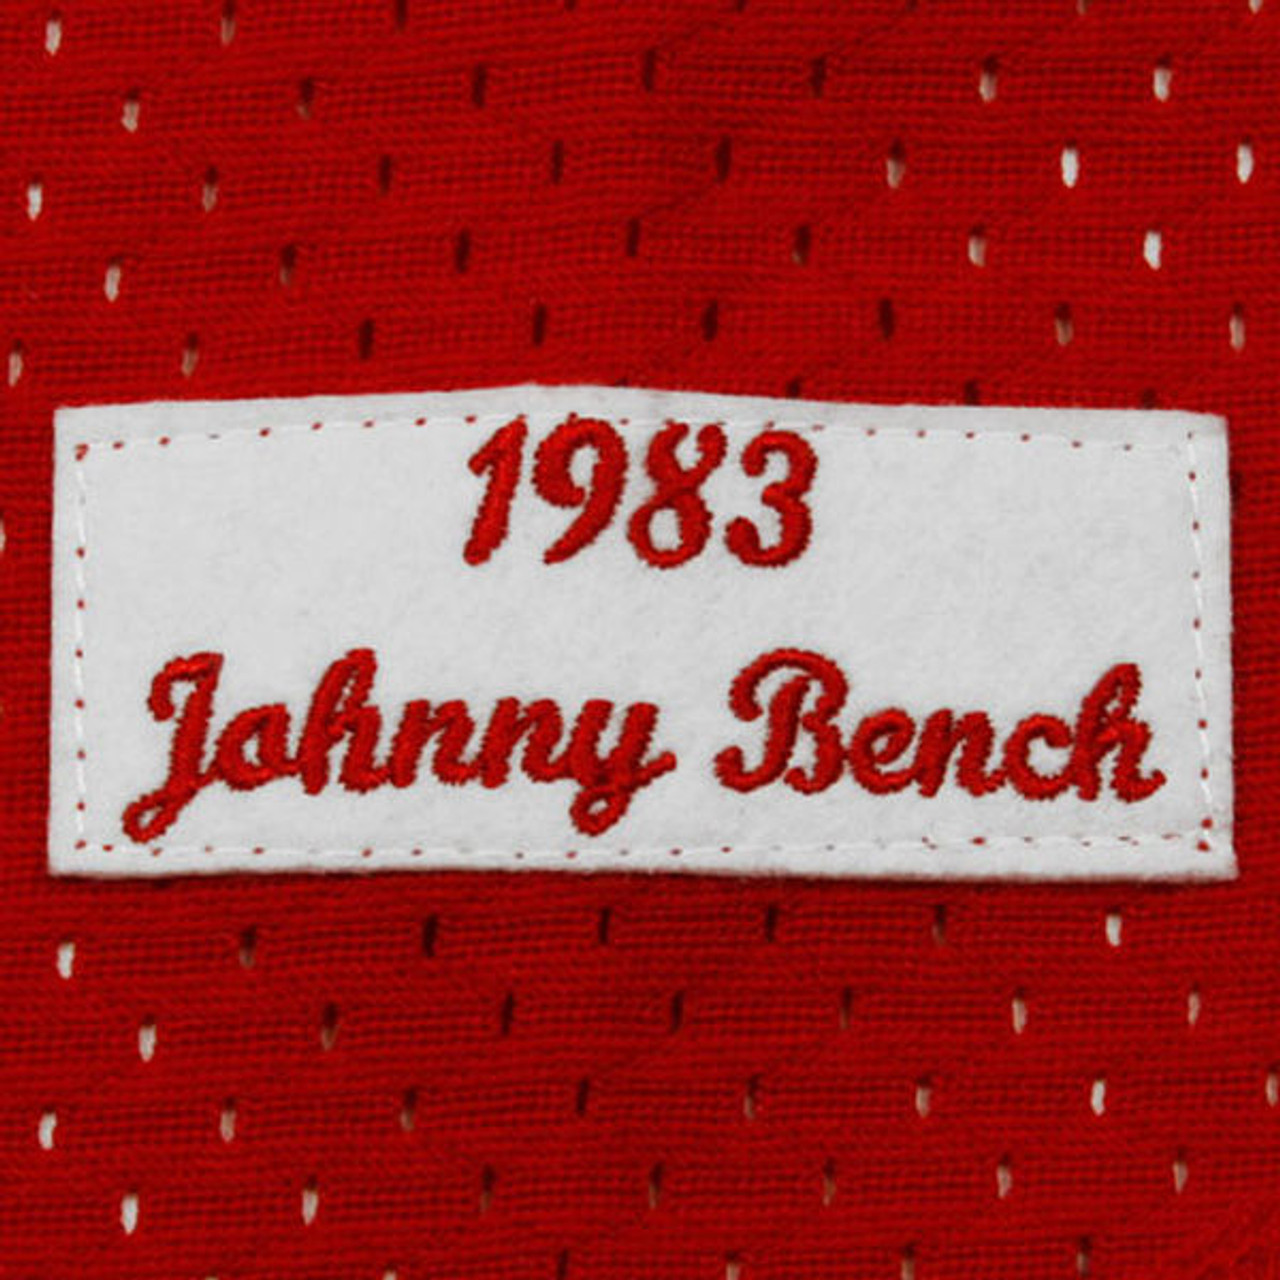 Mitchell & Ness Johnny Bench 1969 Authentic Jersey Cincinnati Reds